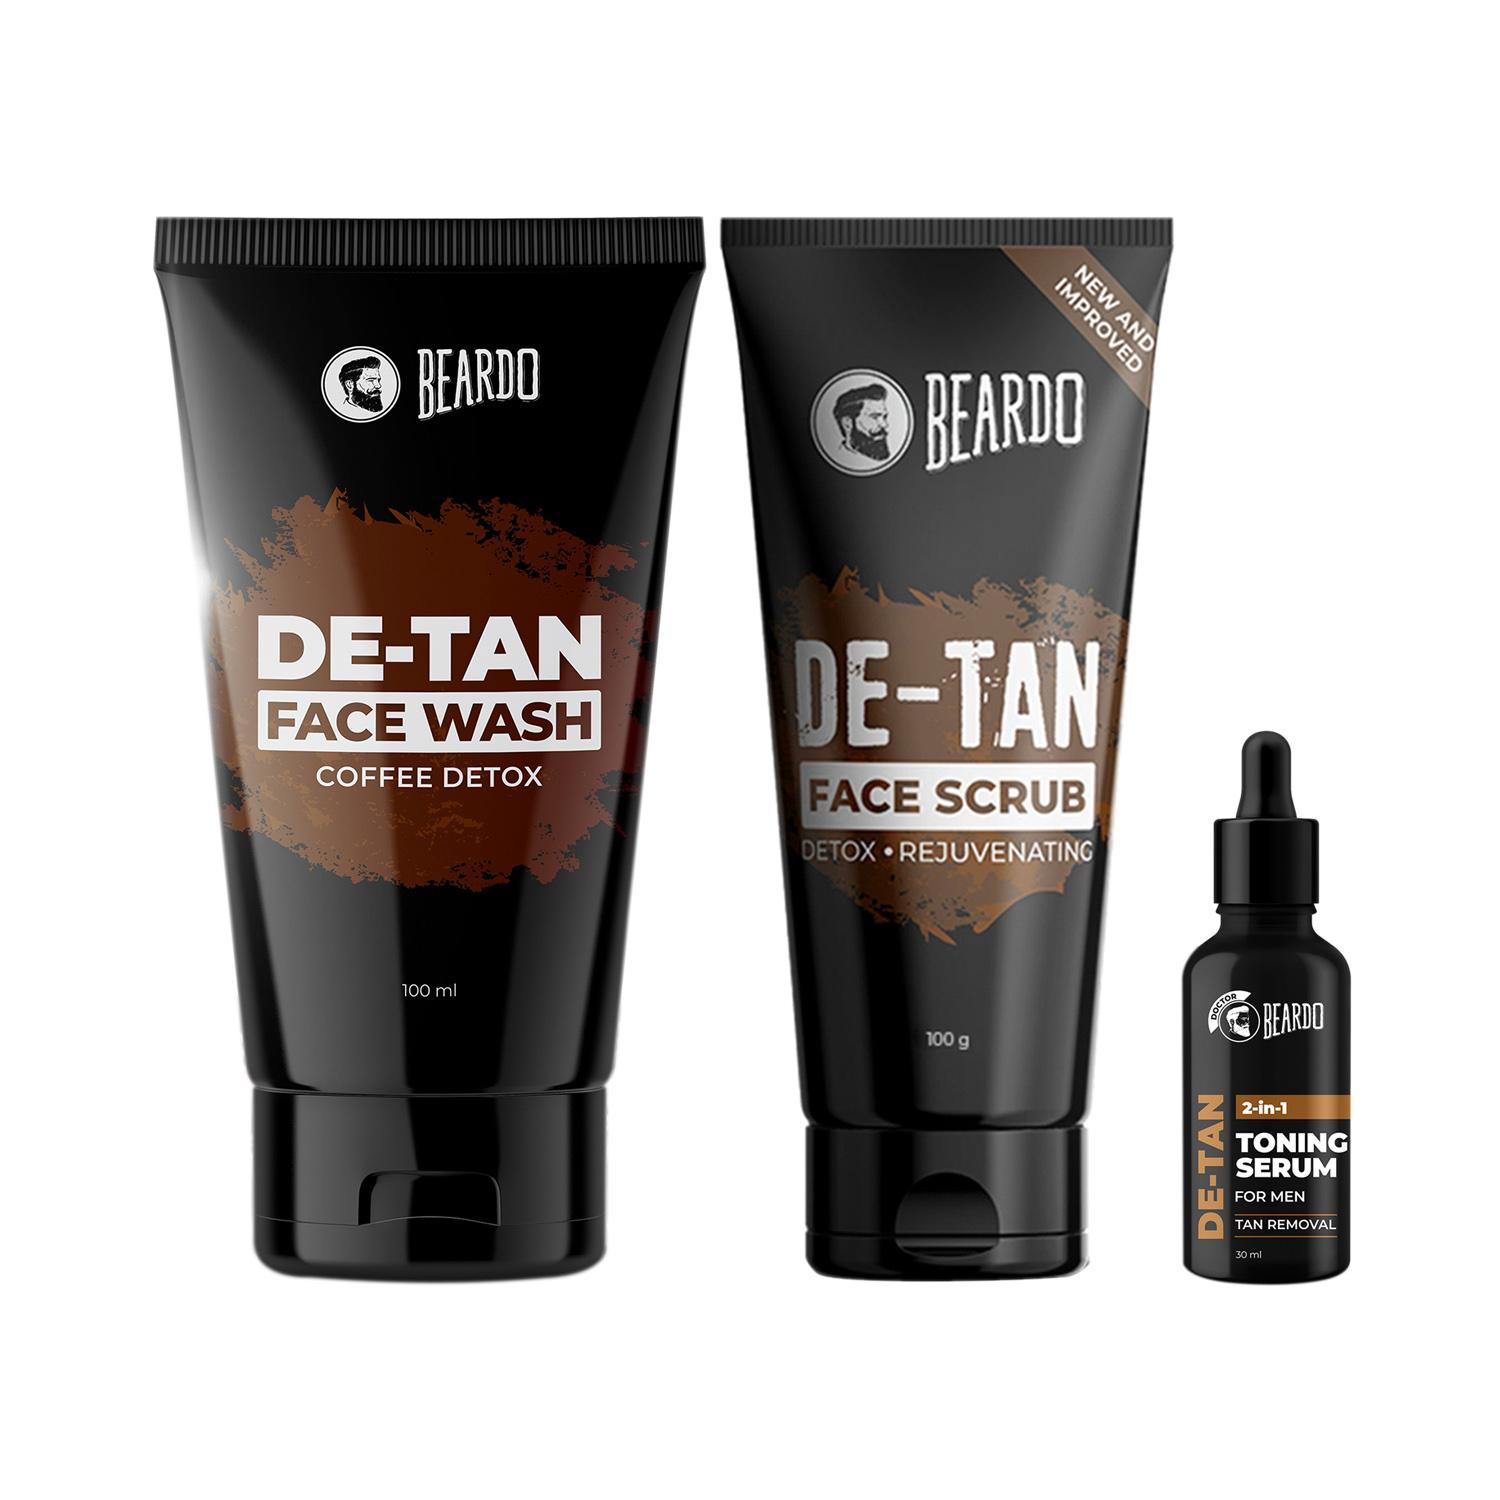 Beardo | Beardo DeTan Face Scrub Tube, Face Wash 50 dia & 2 in 1 Toning Serum Combo